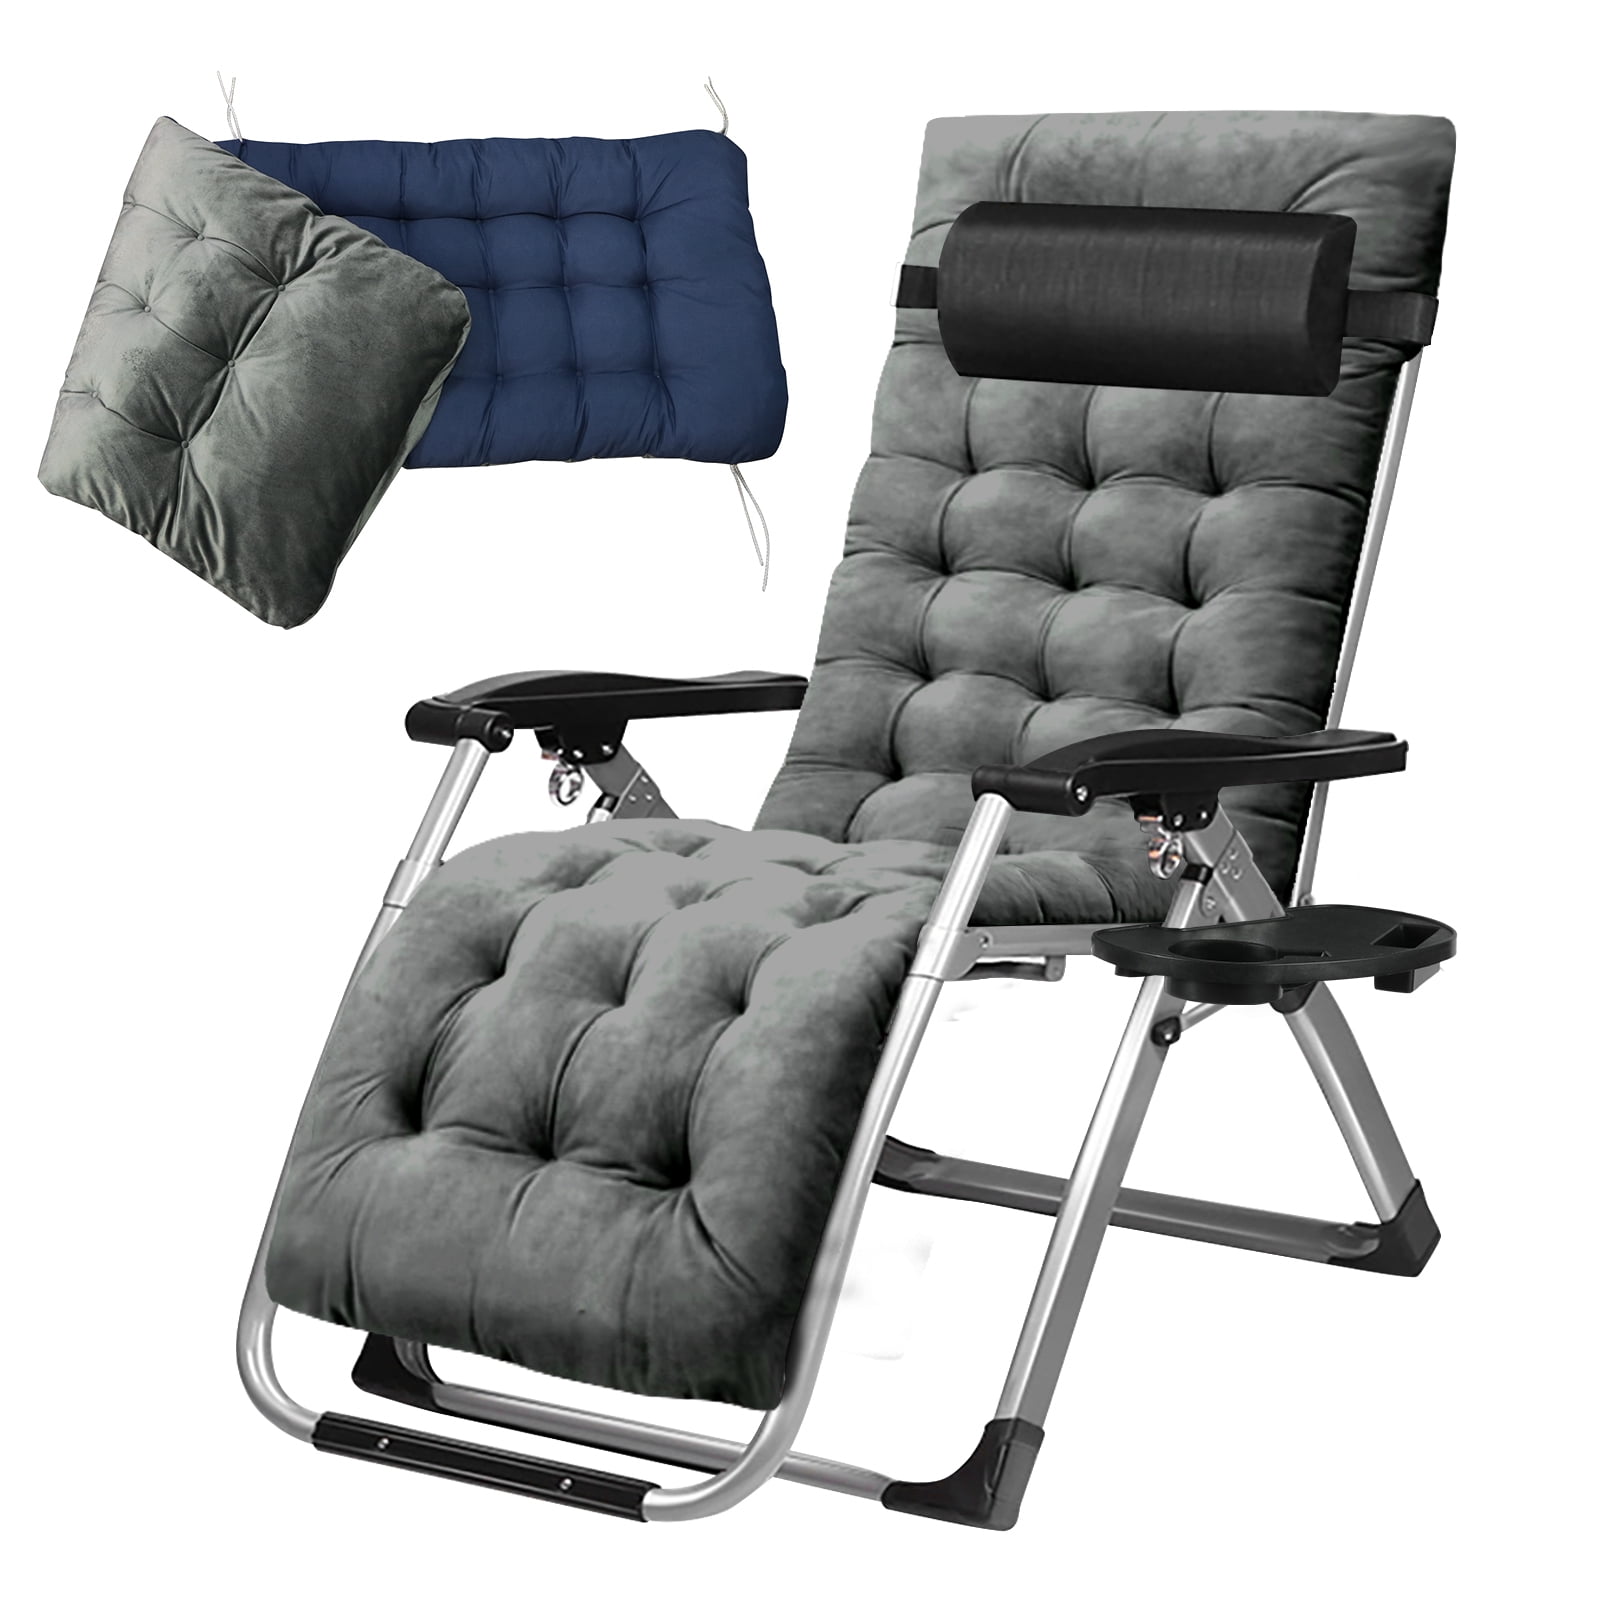 vleugel De volgende Gooey MOPHOTO Zero Gravity Chair Outdoor Folding Recliner Lounge Chair, Portable  Chaise with Detachable Soft Cushion, Cup Holder, Headrest - Walmart.com